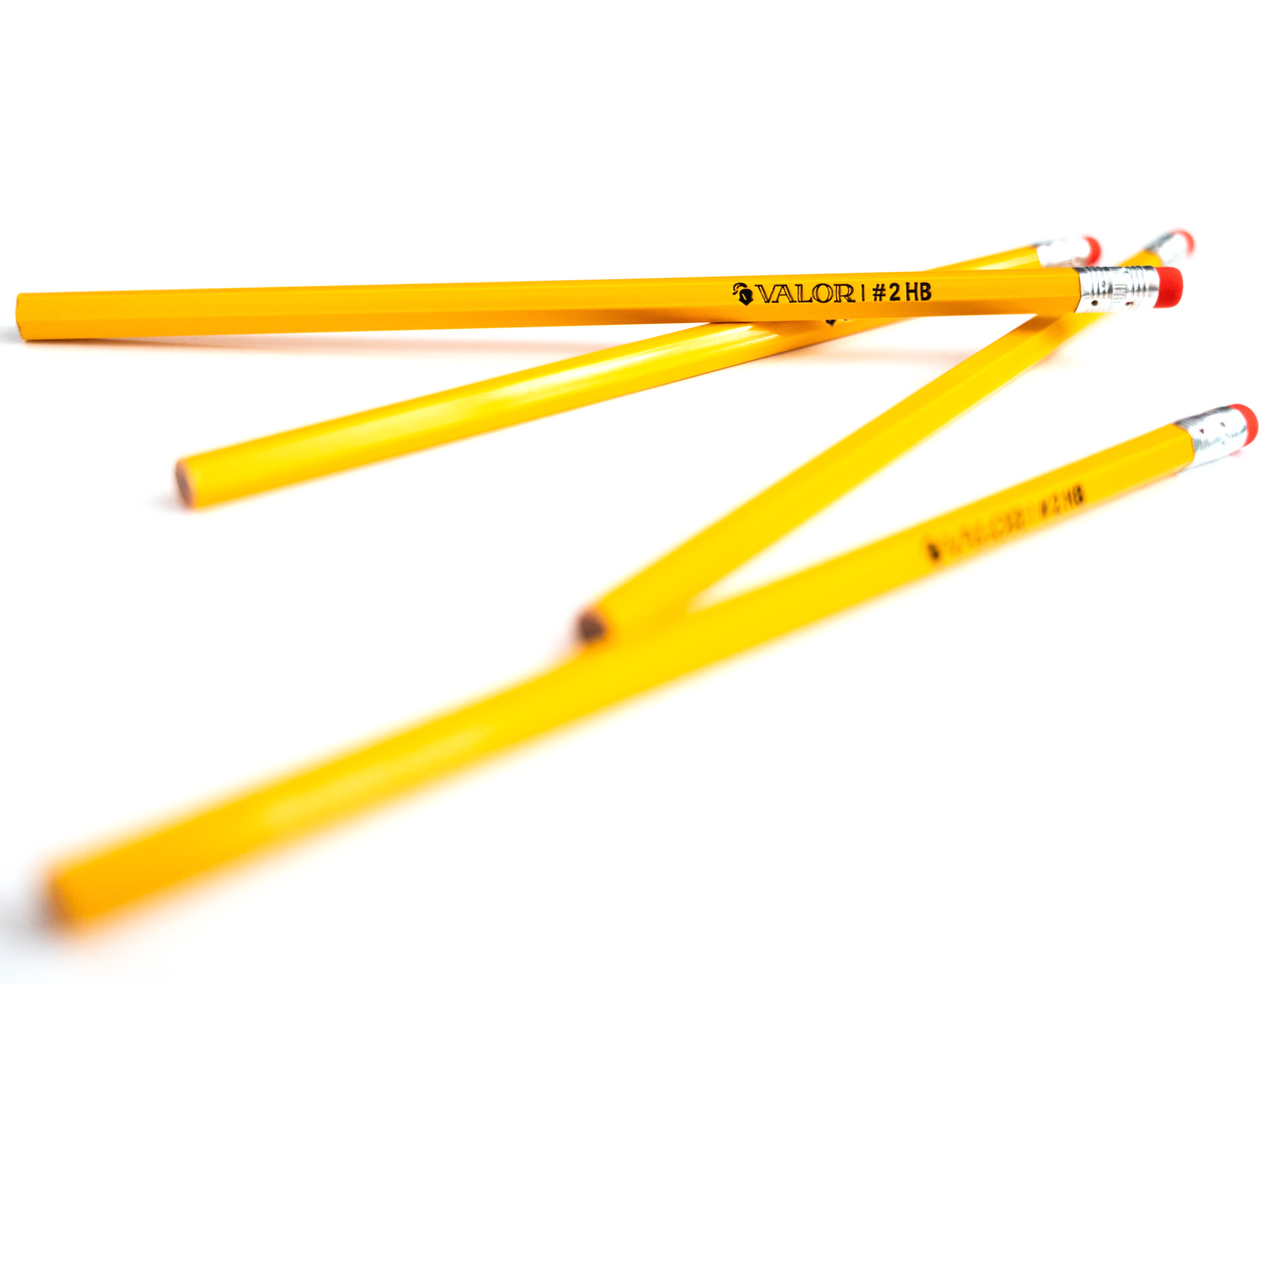 10 Pack of Unsharpened No.2 Pencils - Bulk School Supplies Wholesale C